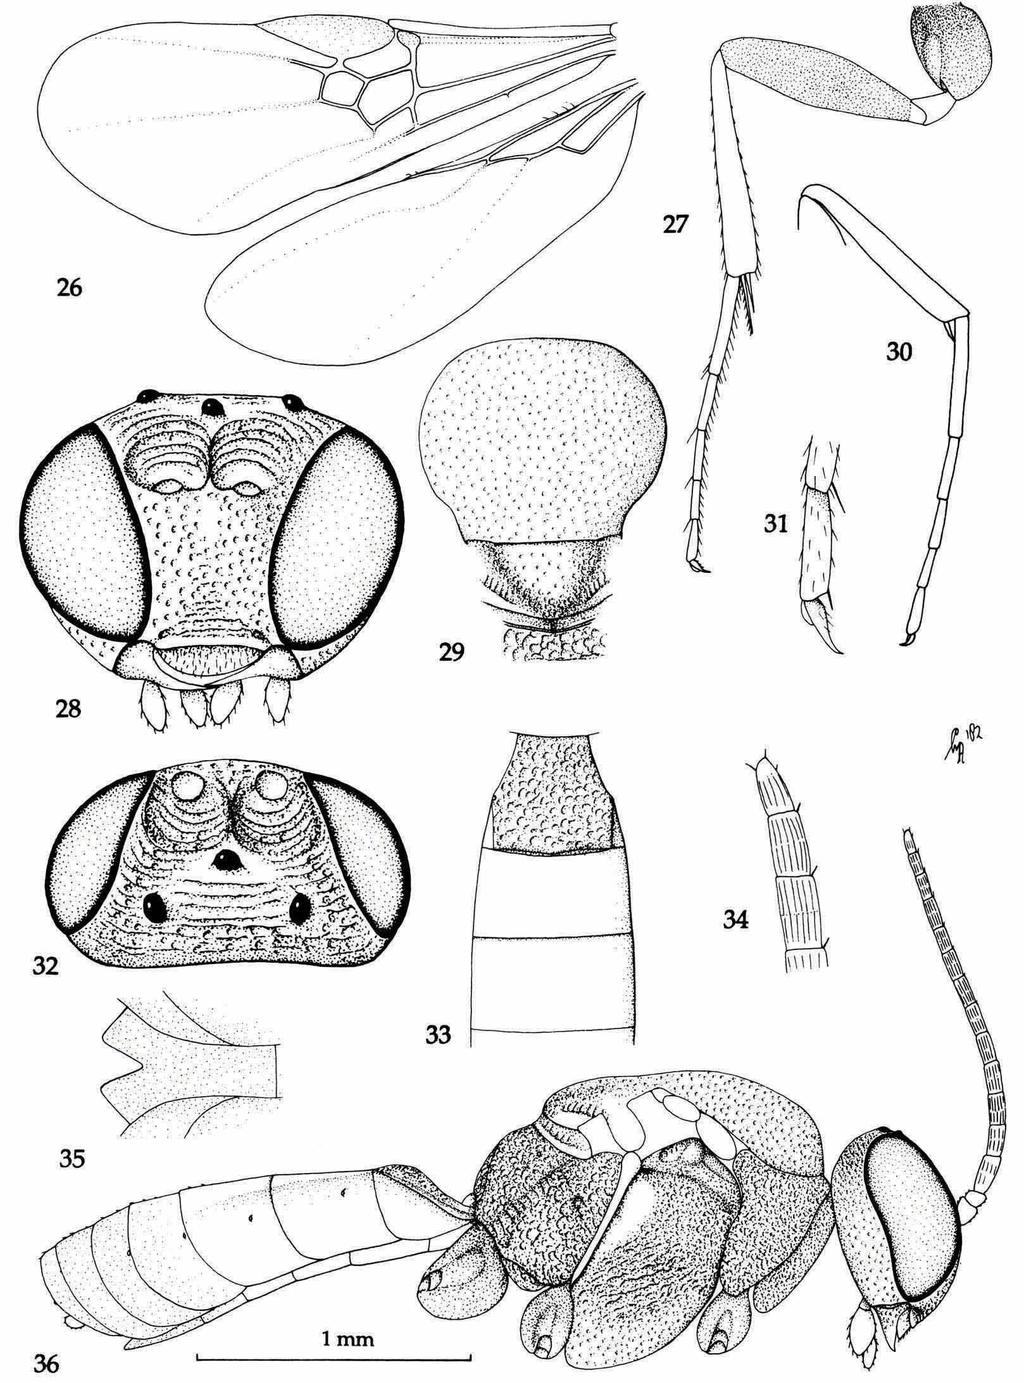 68 ZOOLOGISCHE MEDEDEUNGEN 67 (1993) Figs 26-36, Parelasmosoma palpator Tobias & Yuldashev, 9, holotype.